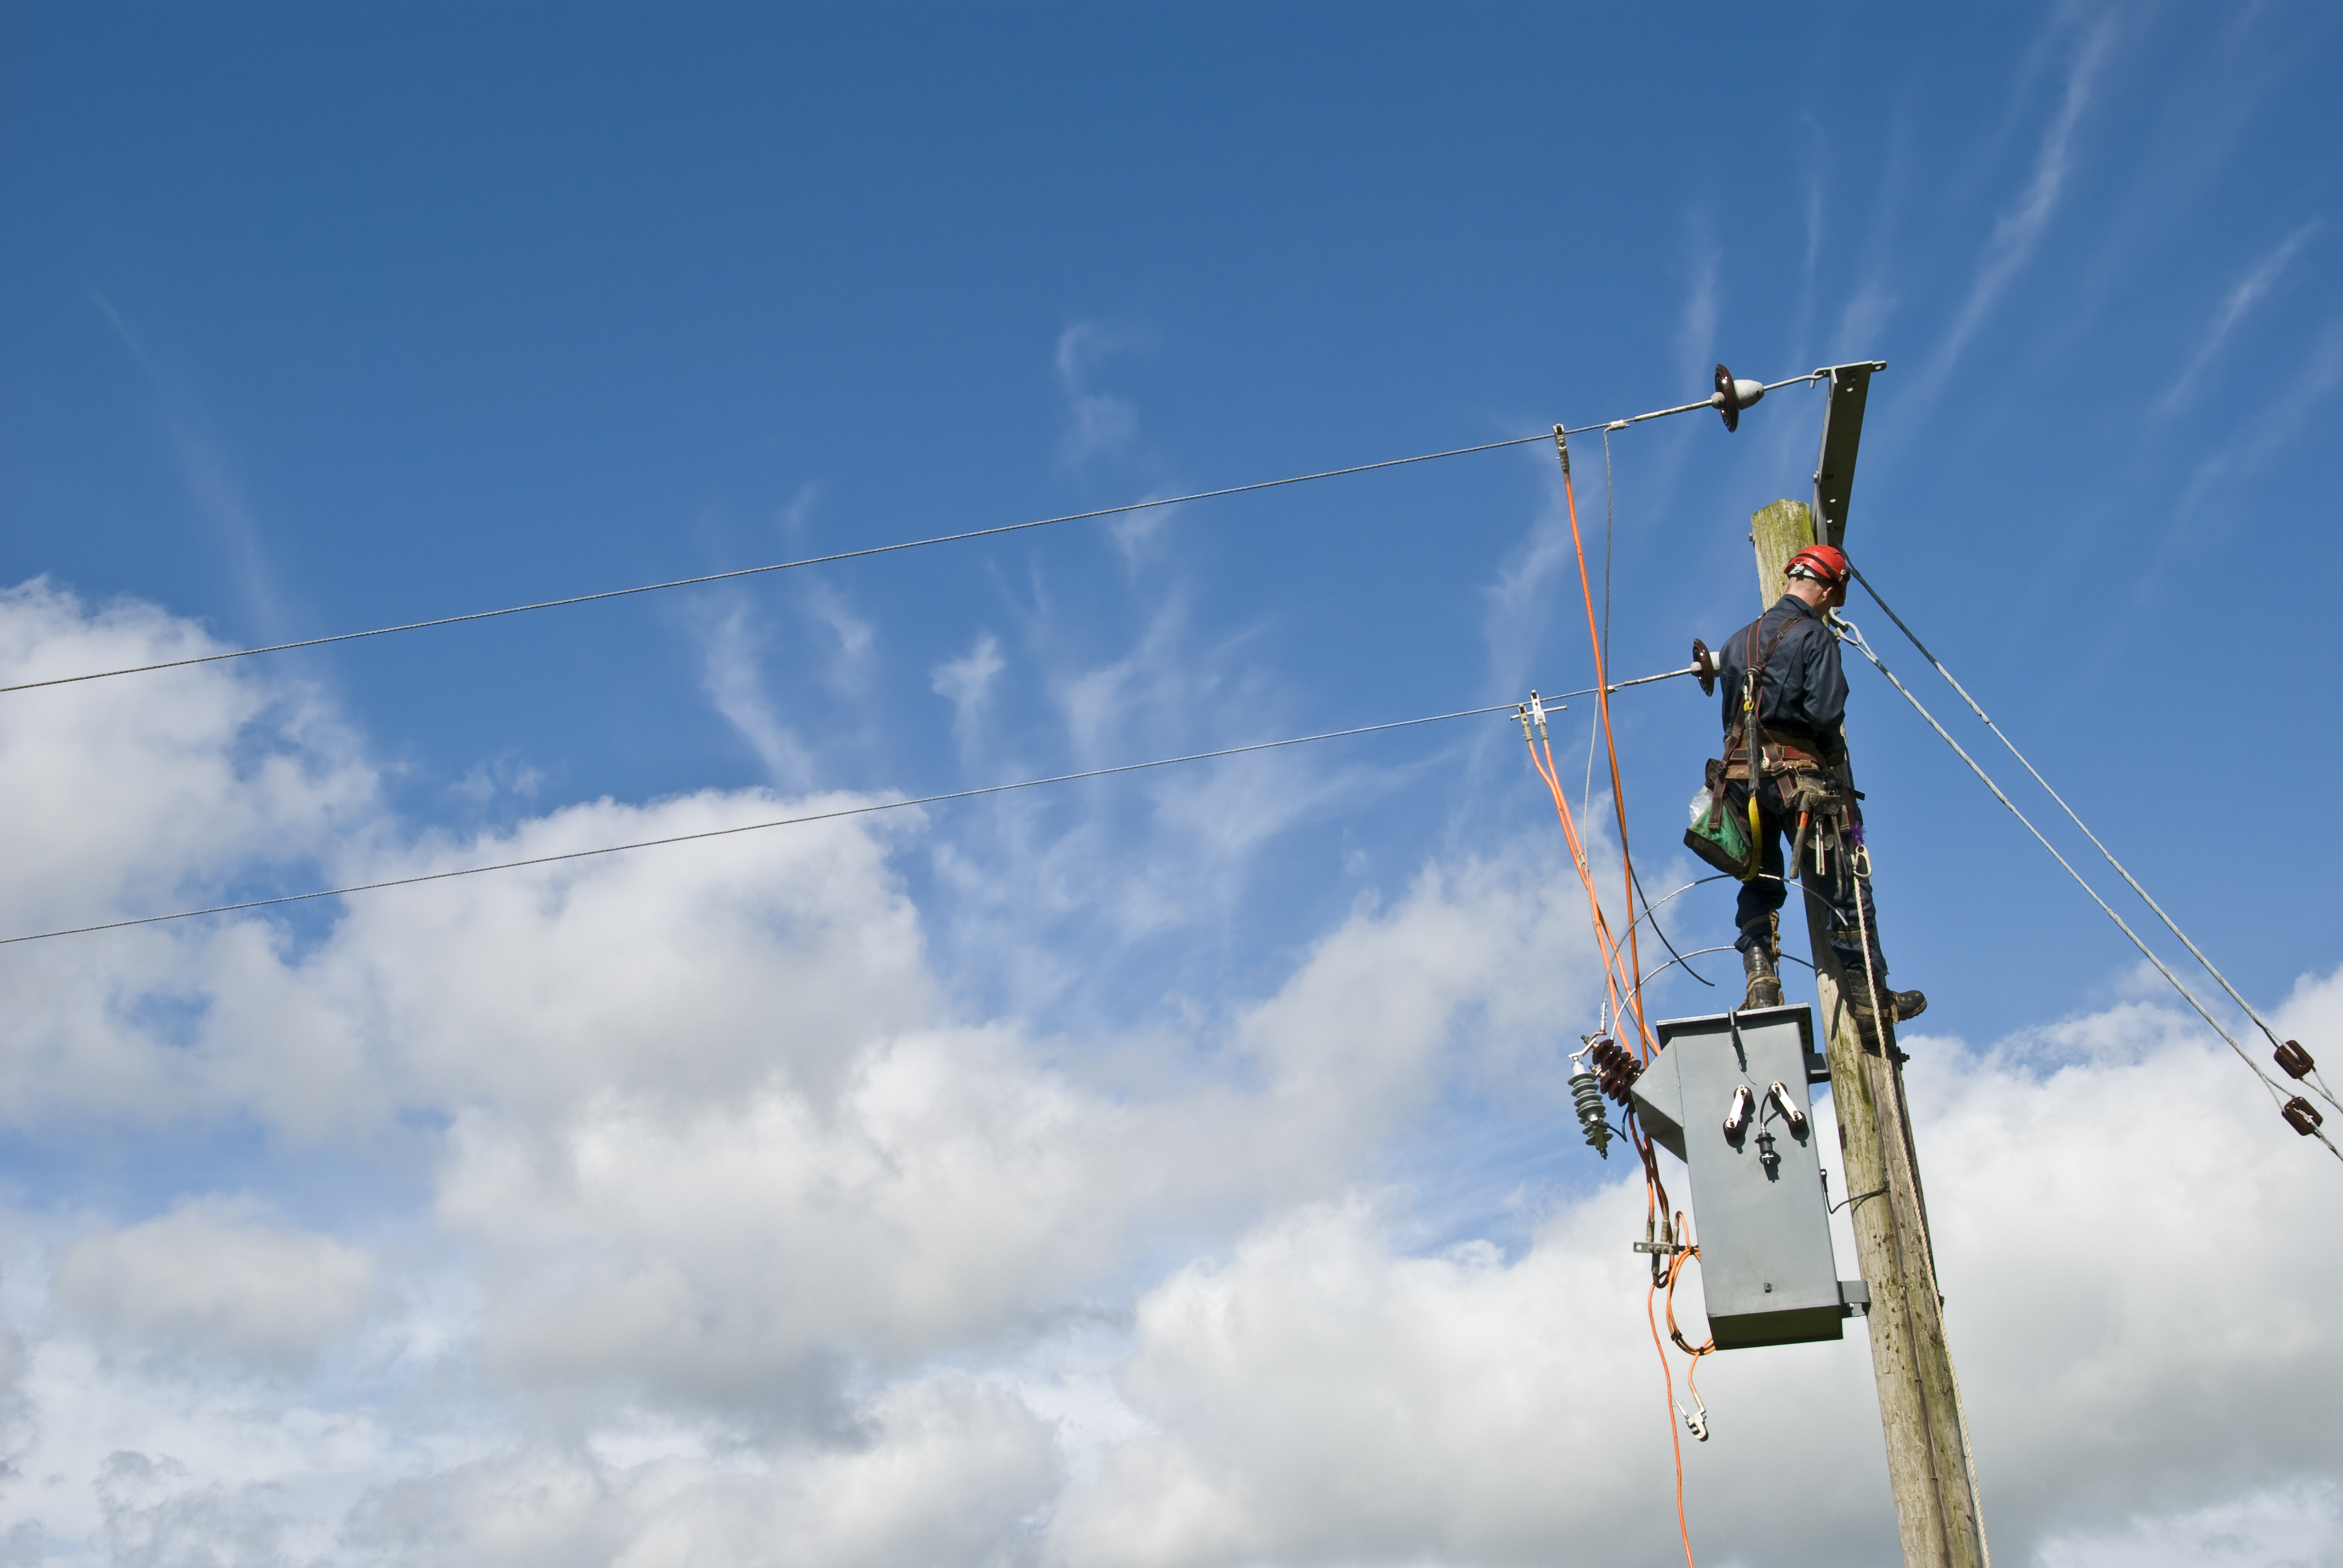 A field service technician working on power lines.